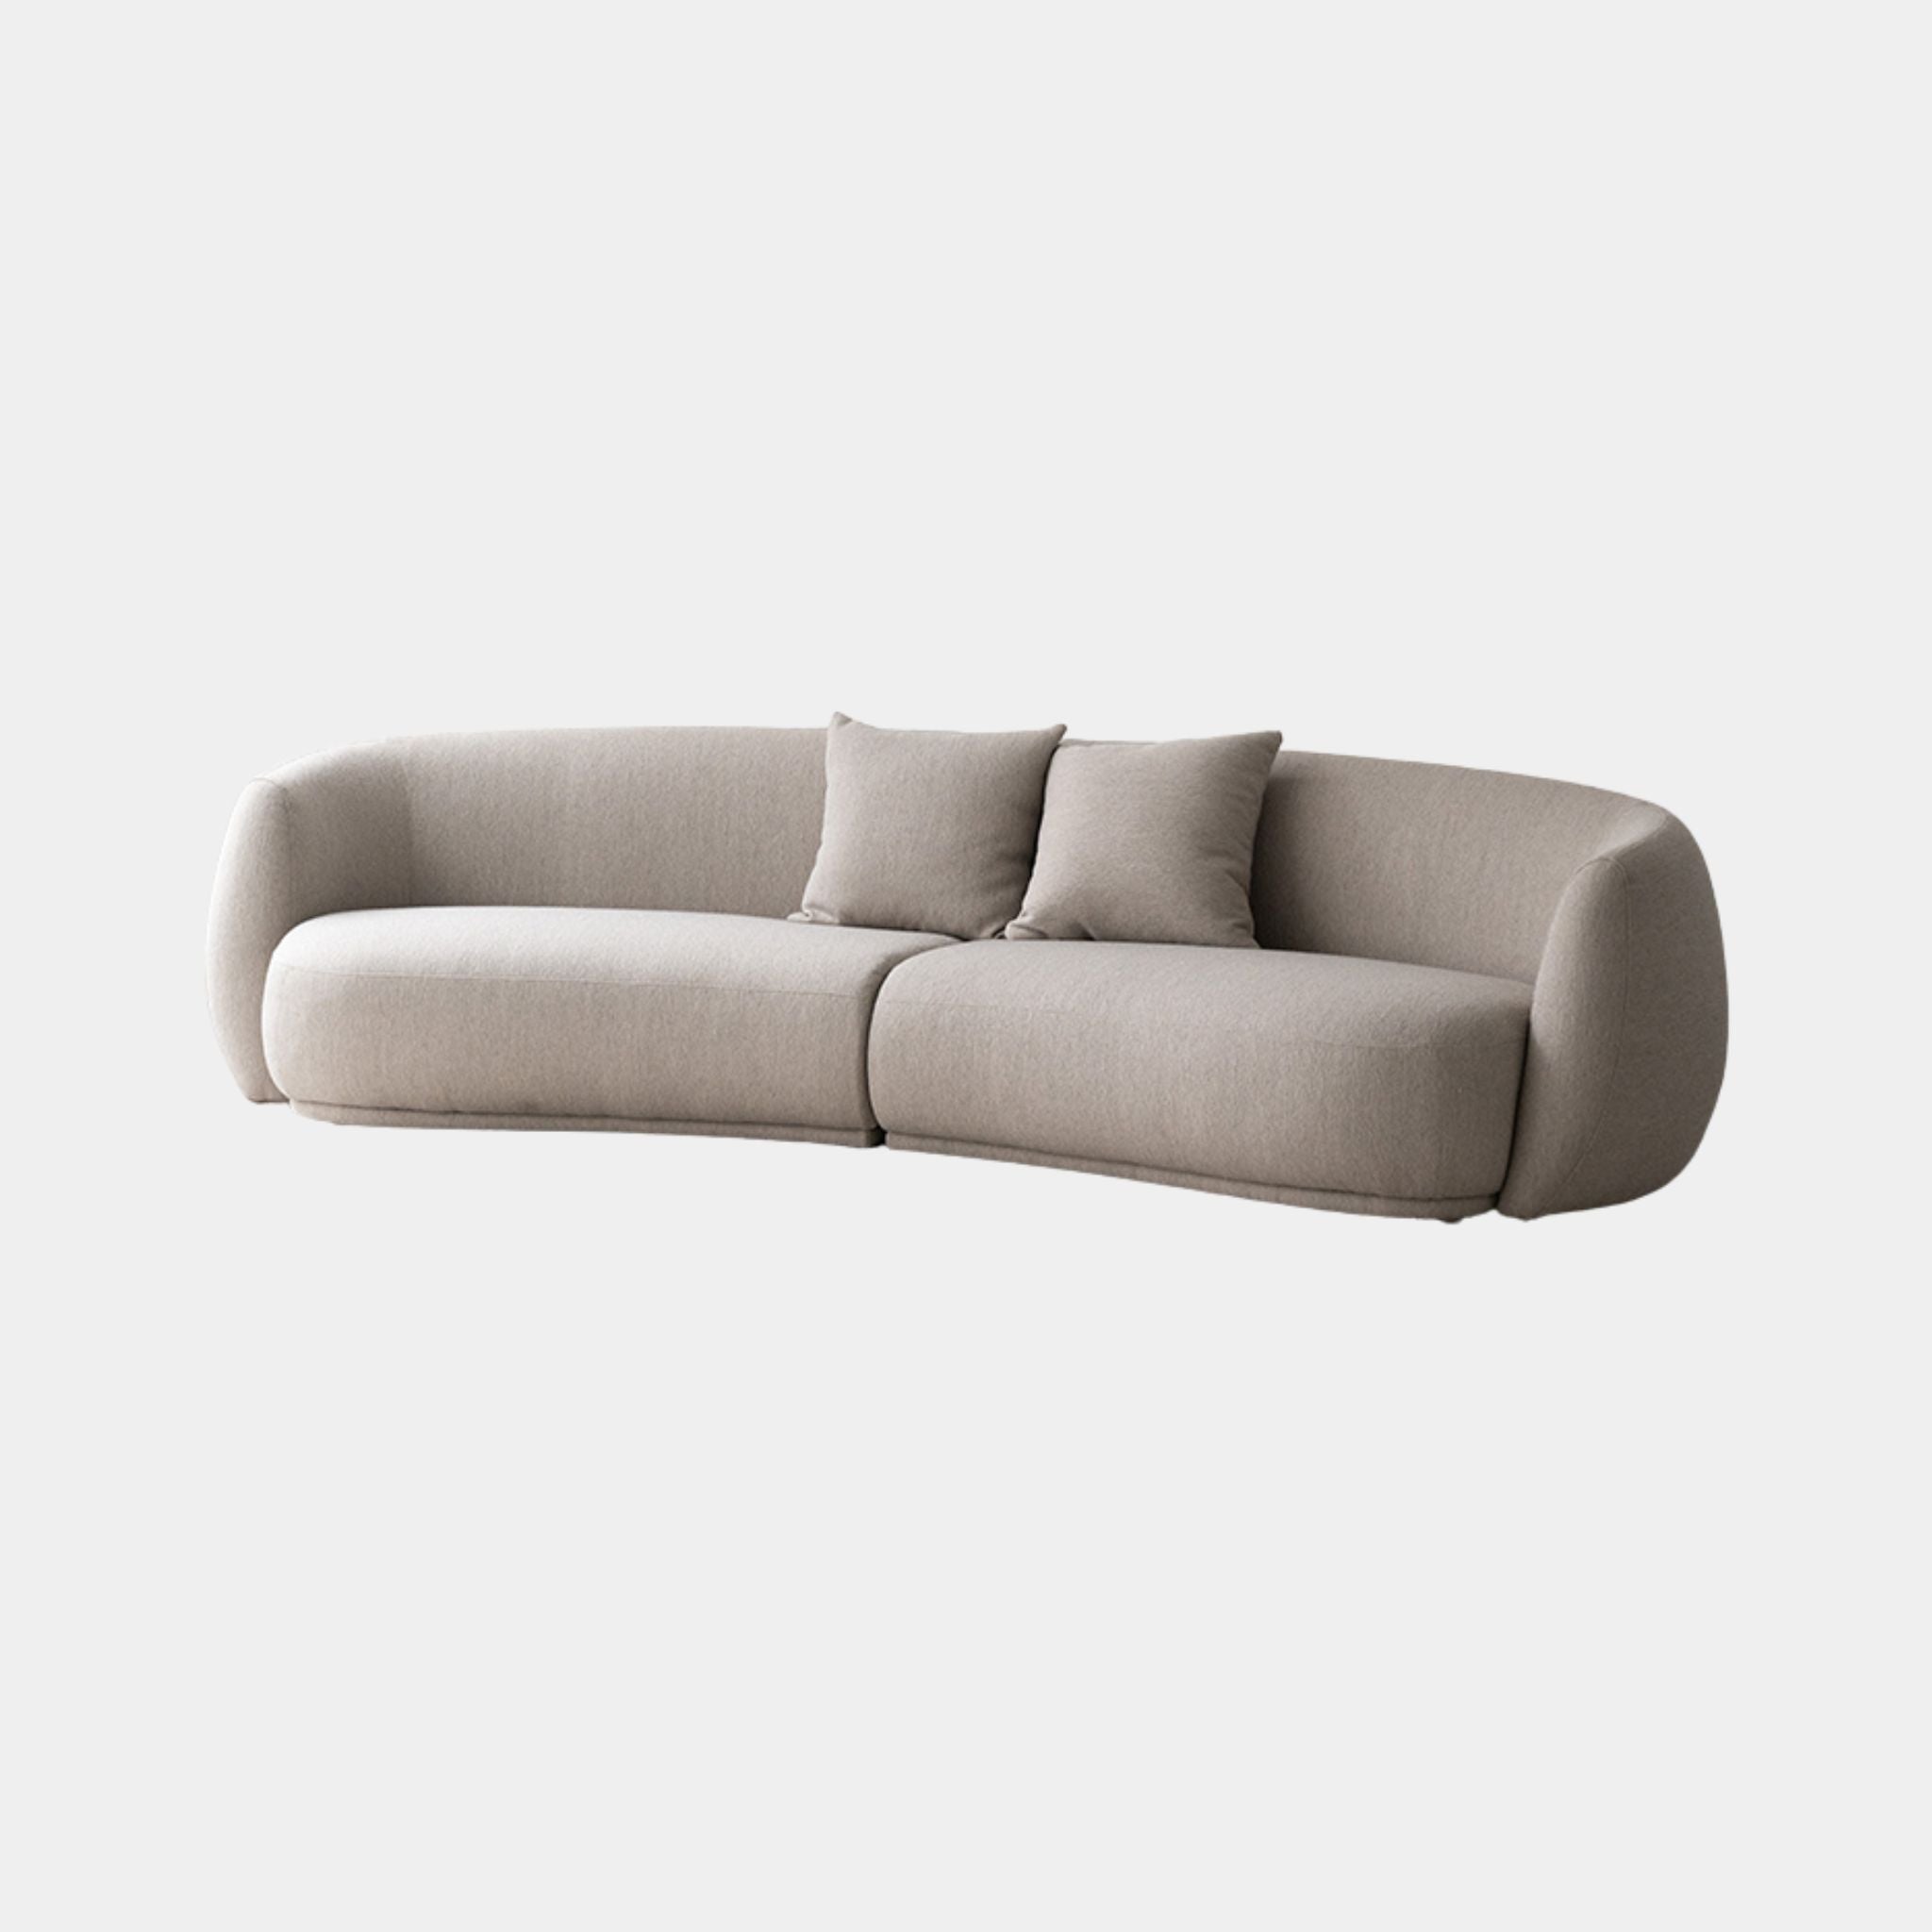 Pacific Modular Sofa - The Feelter